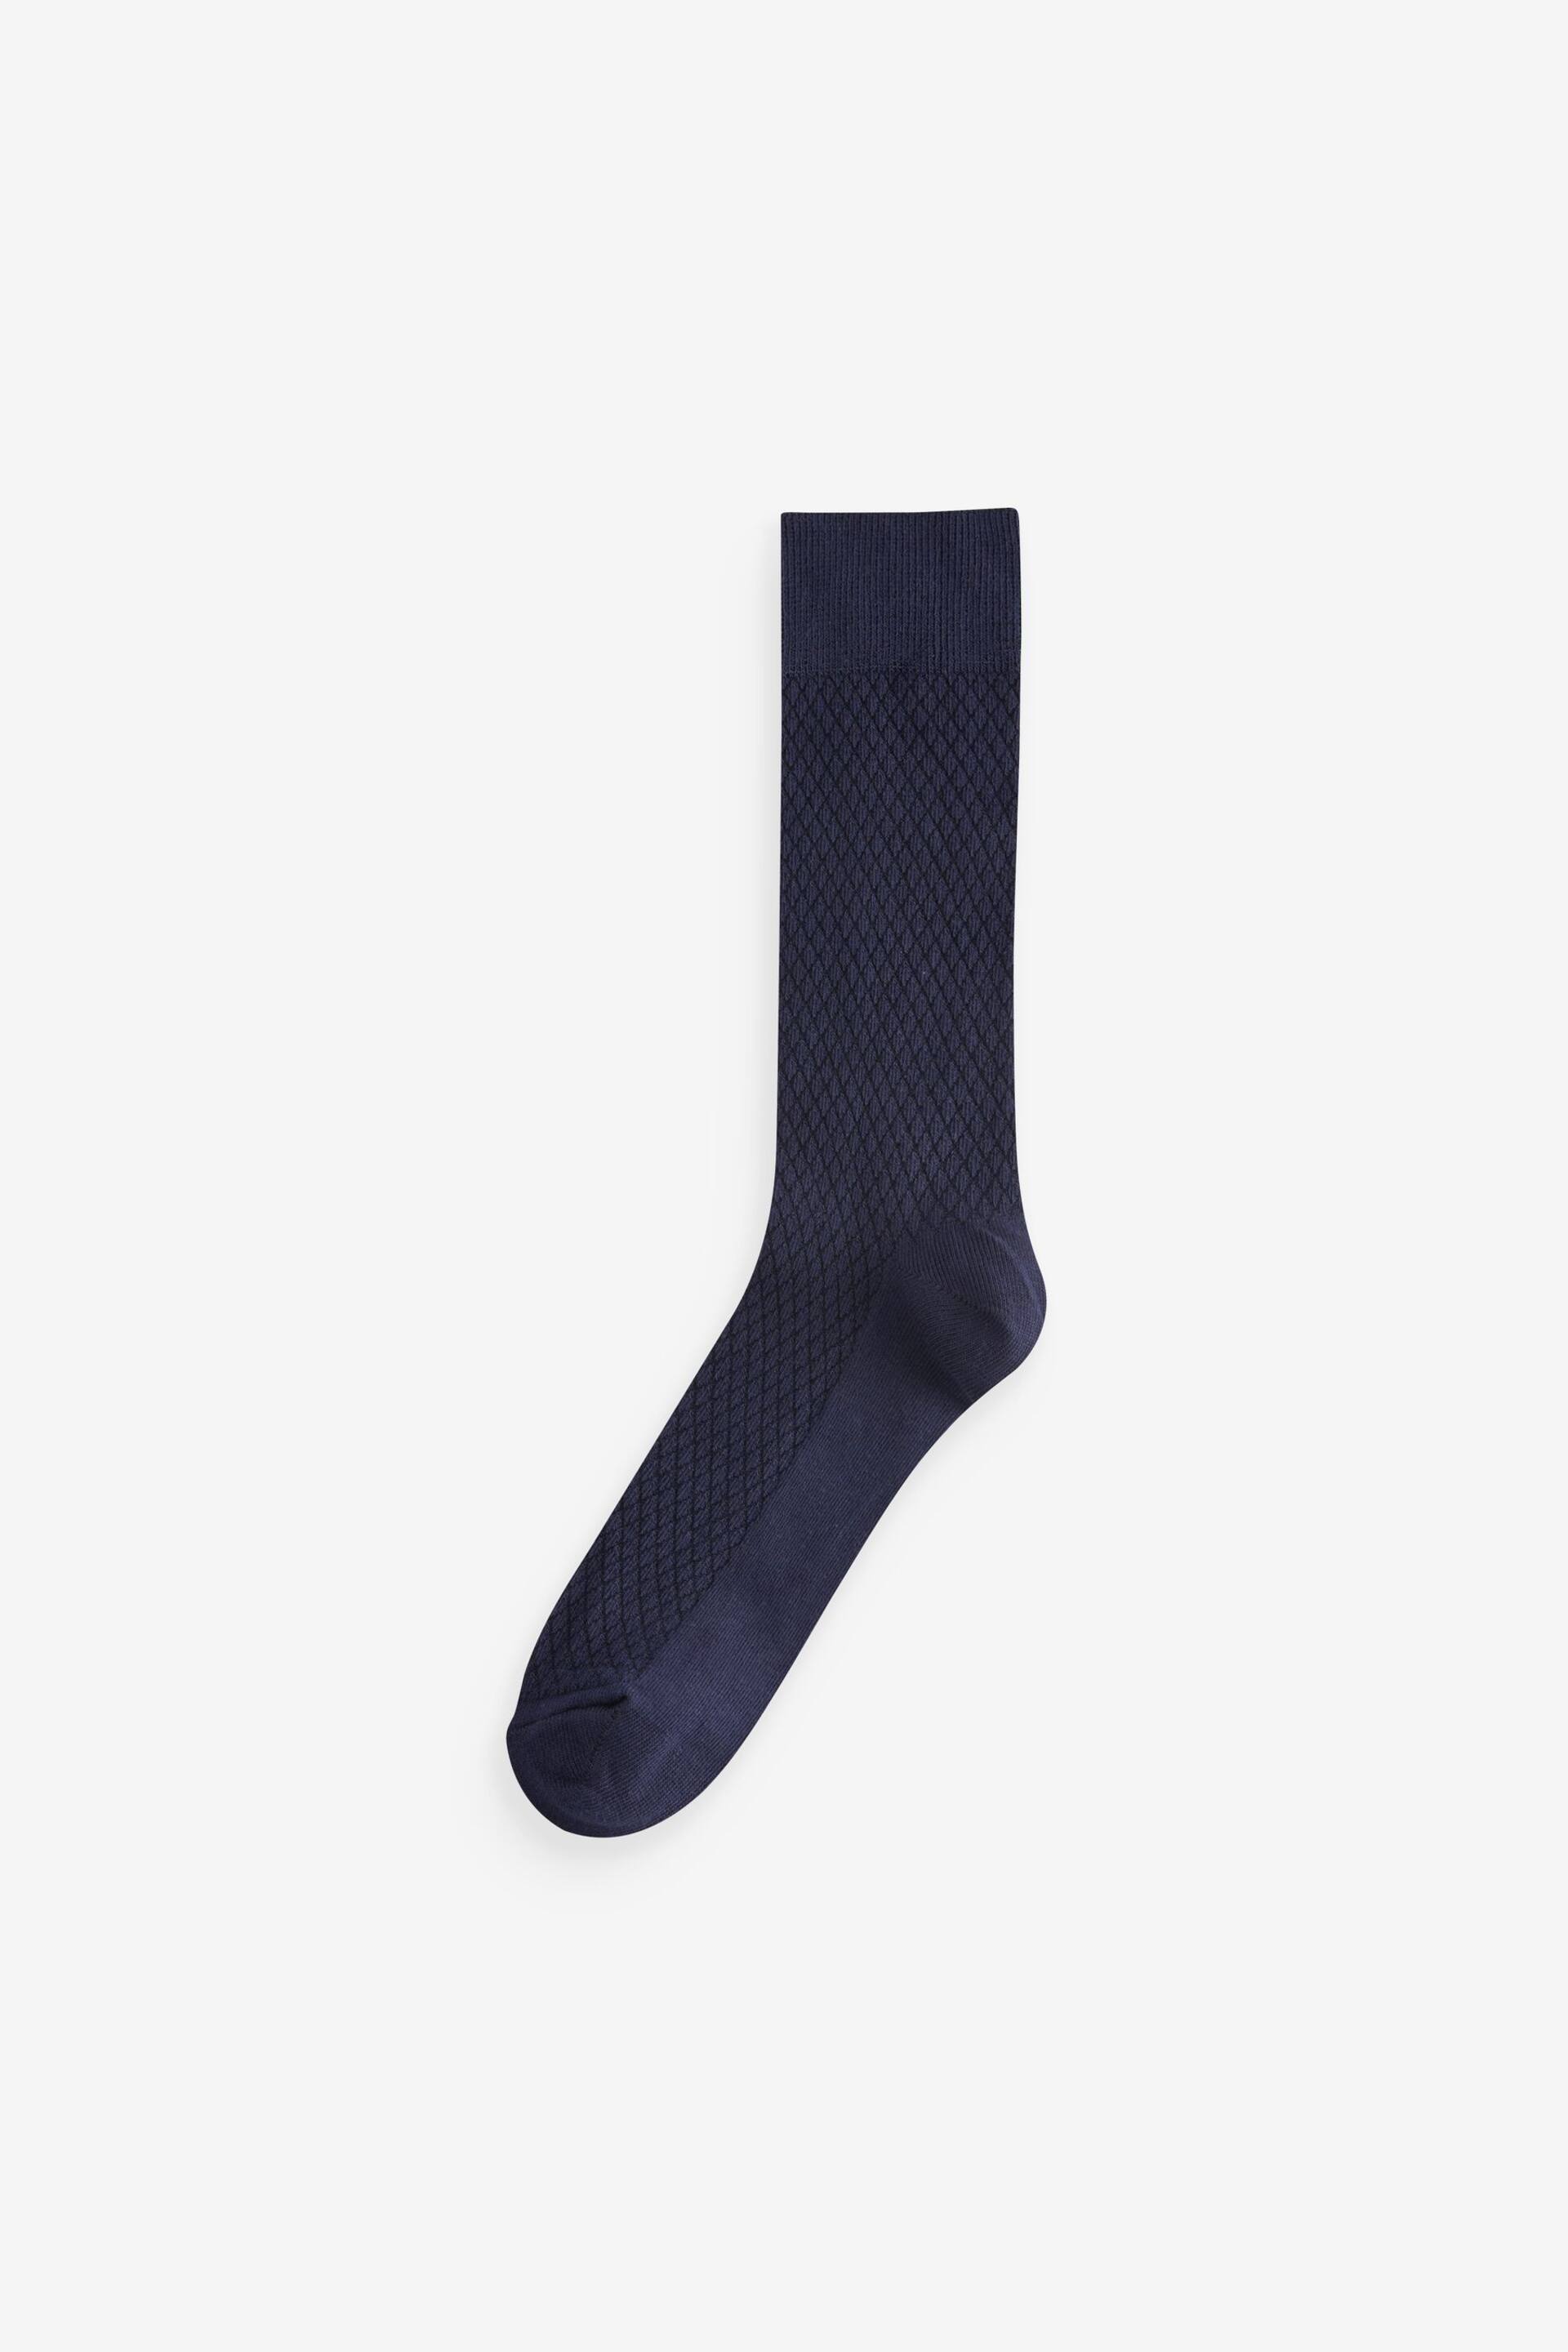 Blue/Green 5 Pack Lightweight Texture Socks - Image 4 of 6